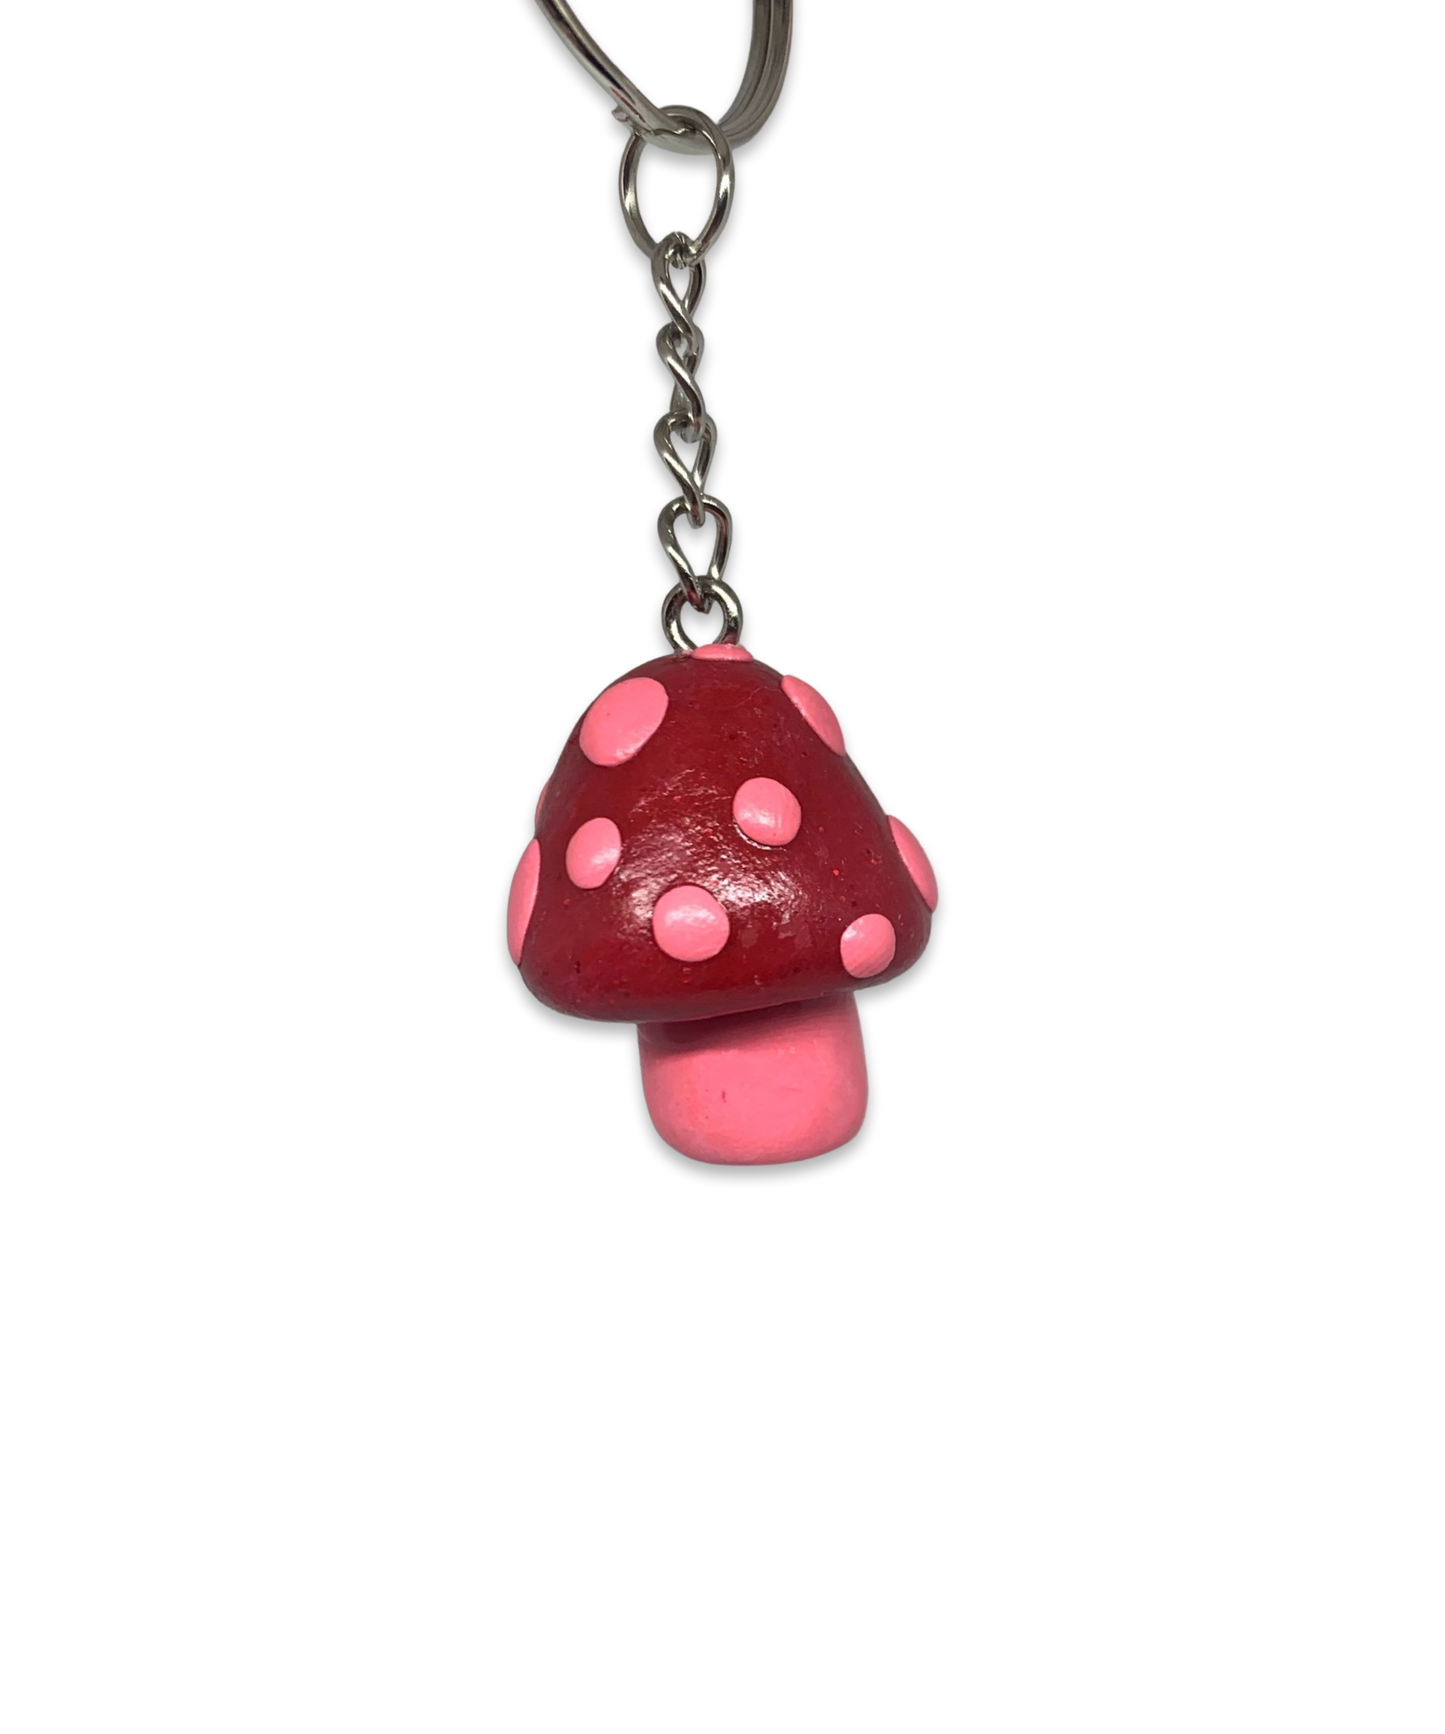 Sparkly Dark Red Monochromatic Spotted Mushroom Keychains, cartoon, stylized, cute